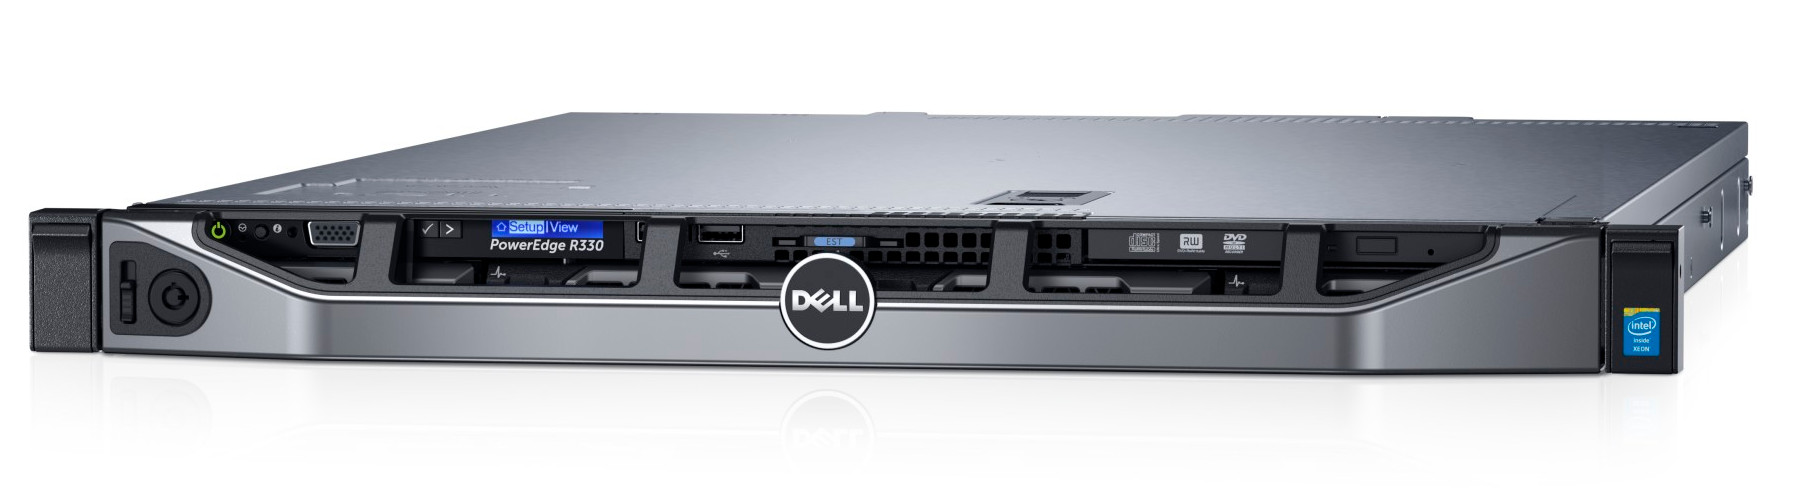 Сервер Dell PowerEdge R330, E3-1270v6 (3.8GHz, 4C), No Memory, No HDD (up to 8x2.5"), PERC H730/1GB, DVD+/-RW, Broadcom 5720 DP 1Gb LOM, iDRAC8 Enterp